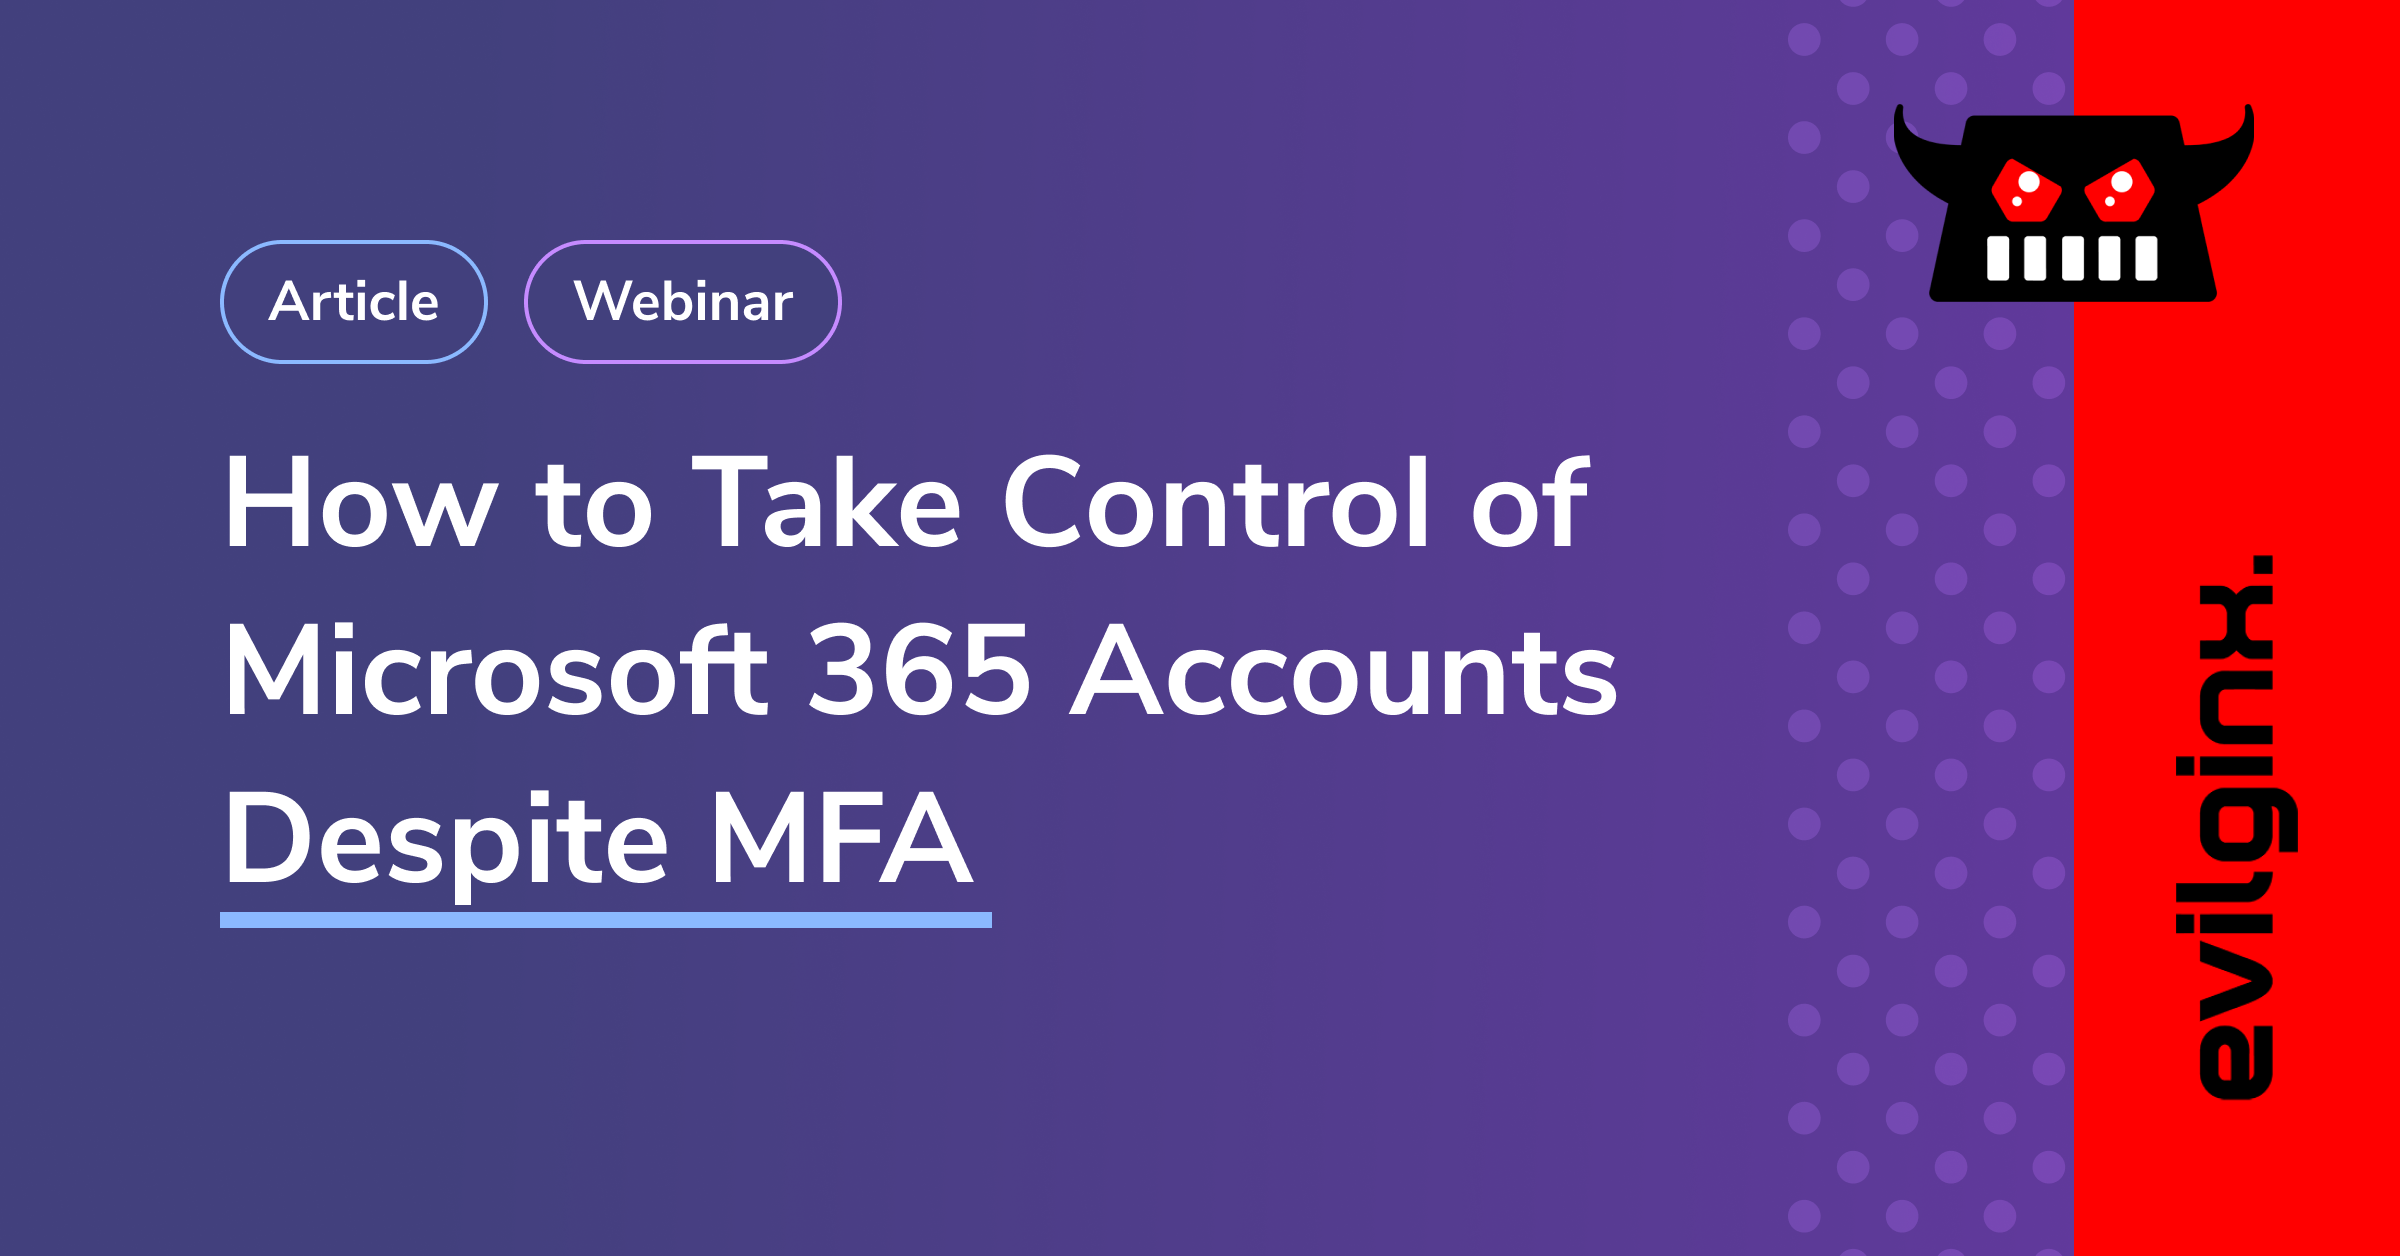 How to Take Control of Microsoft 365 Accounts, Despite MFA?